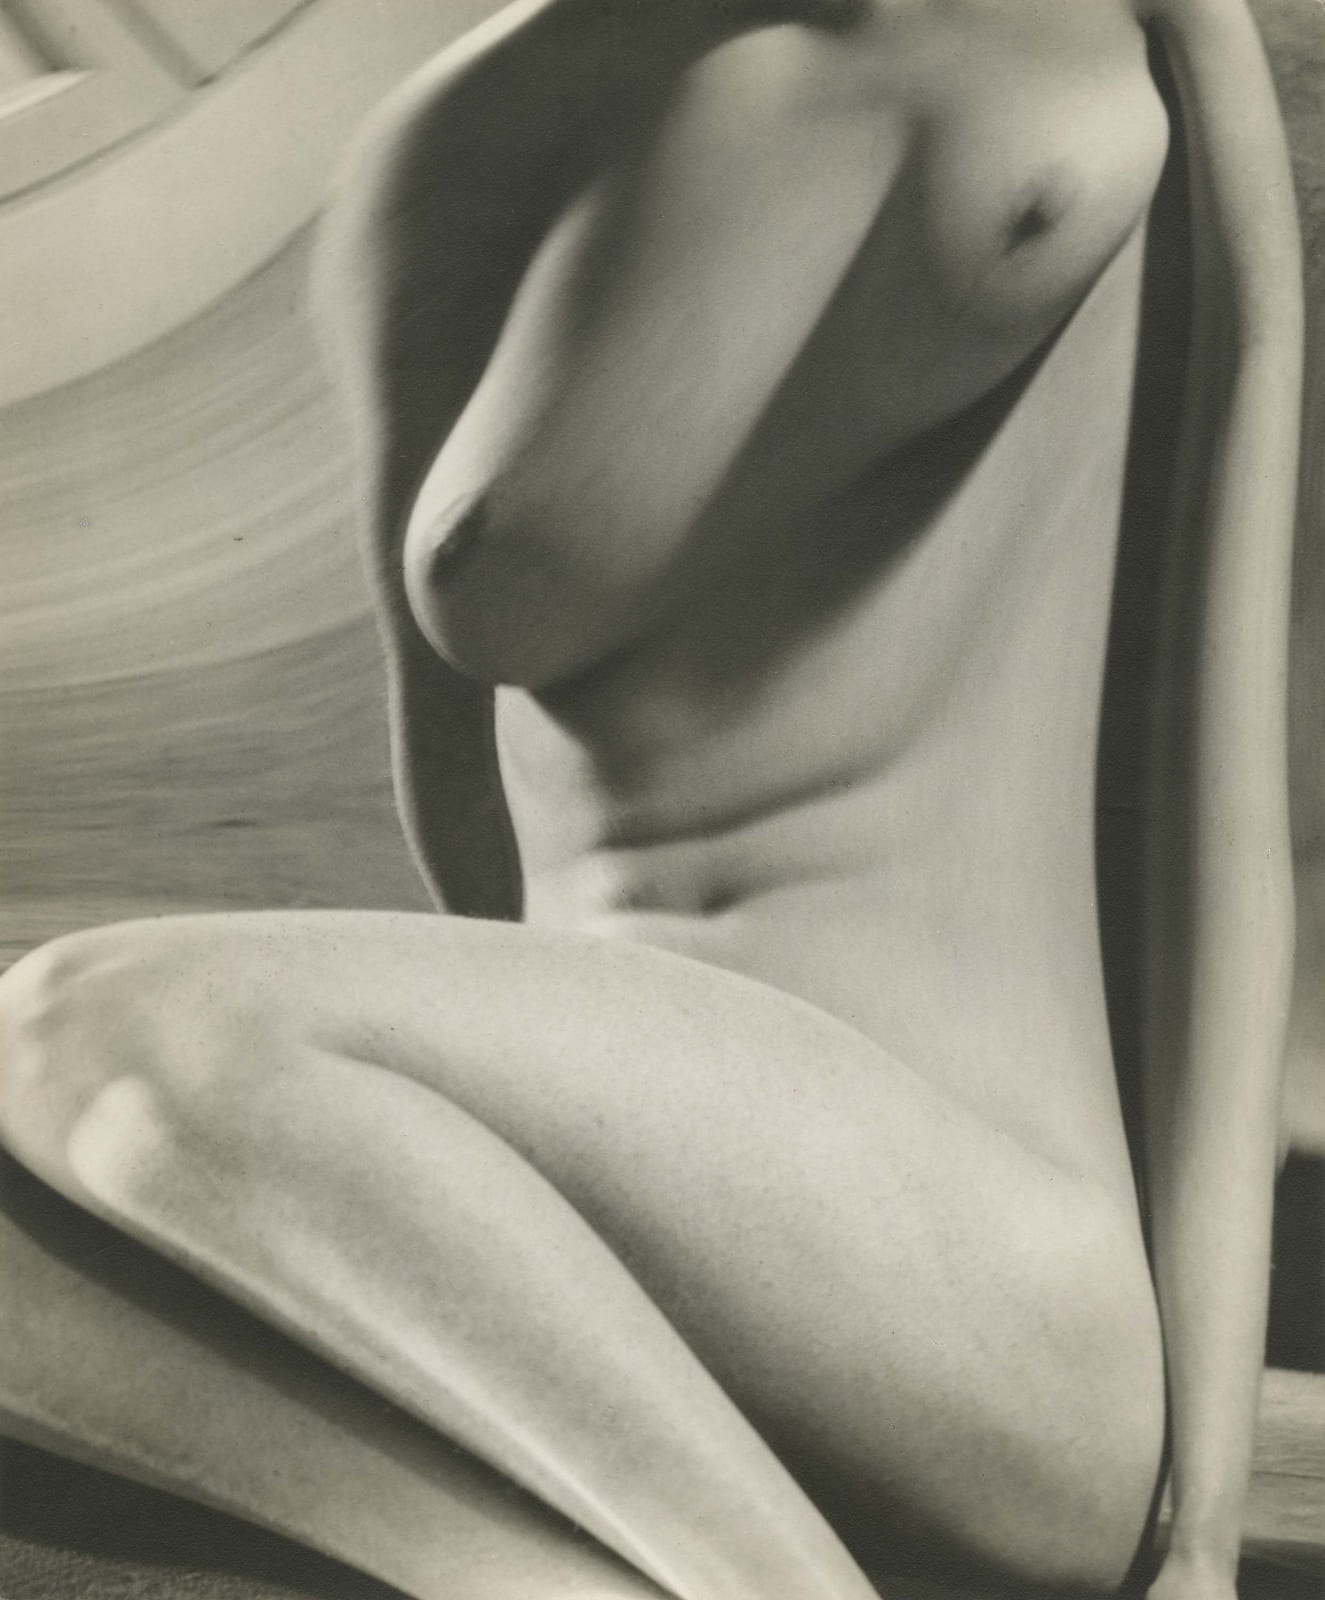 André Kertész Distortion #63 distortion of nude woman's body